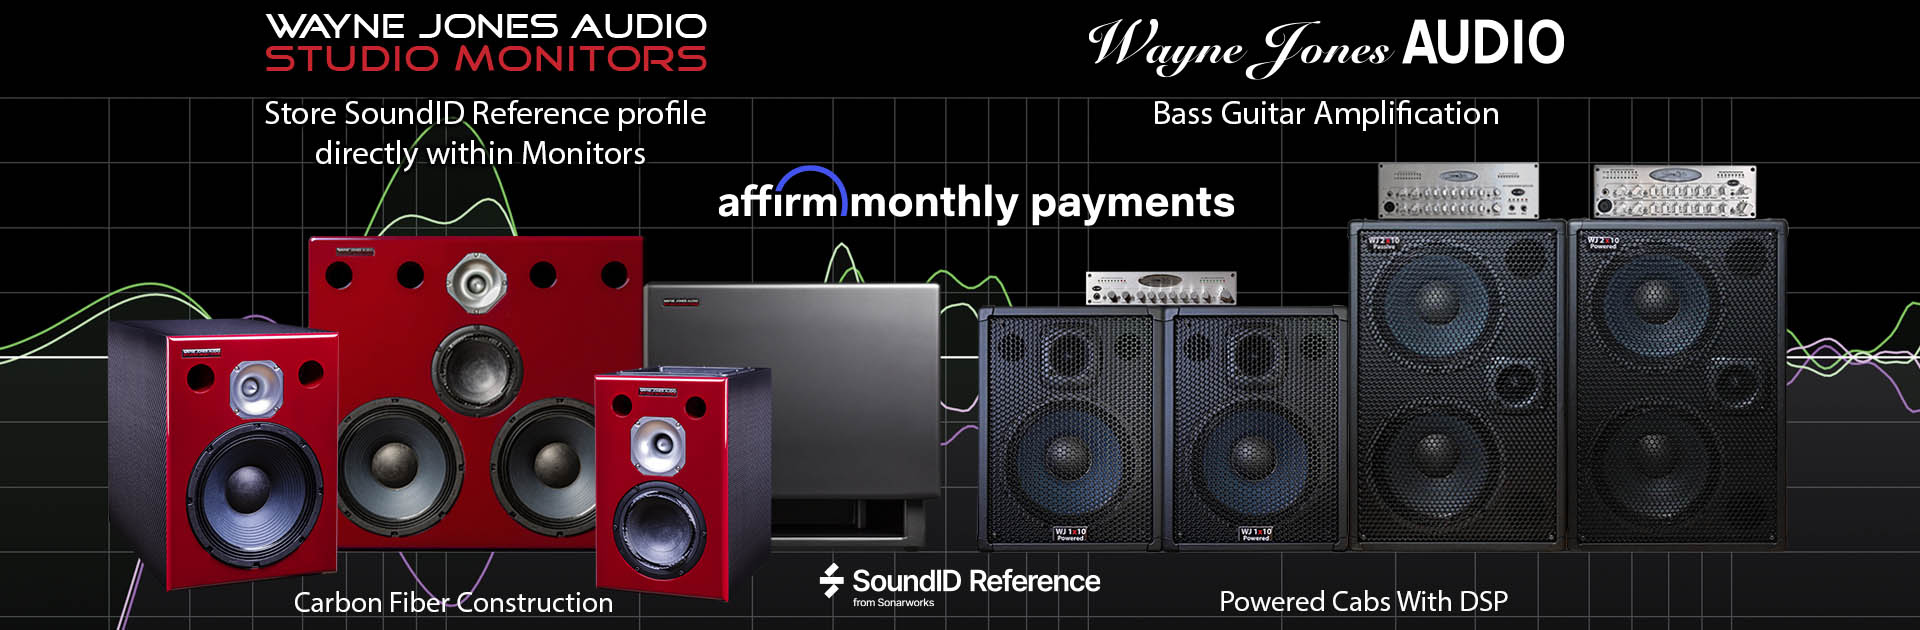 Wayne Jones Audio Powered Carbon Fiber Recording Studio Monitors, Bass guitar Amplification, bass guitar speaker cabinets. Affirm monthly payments available.